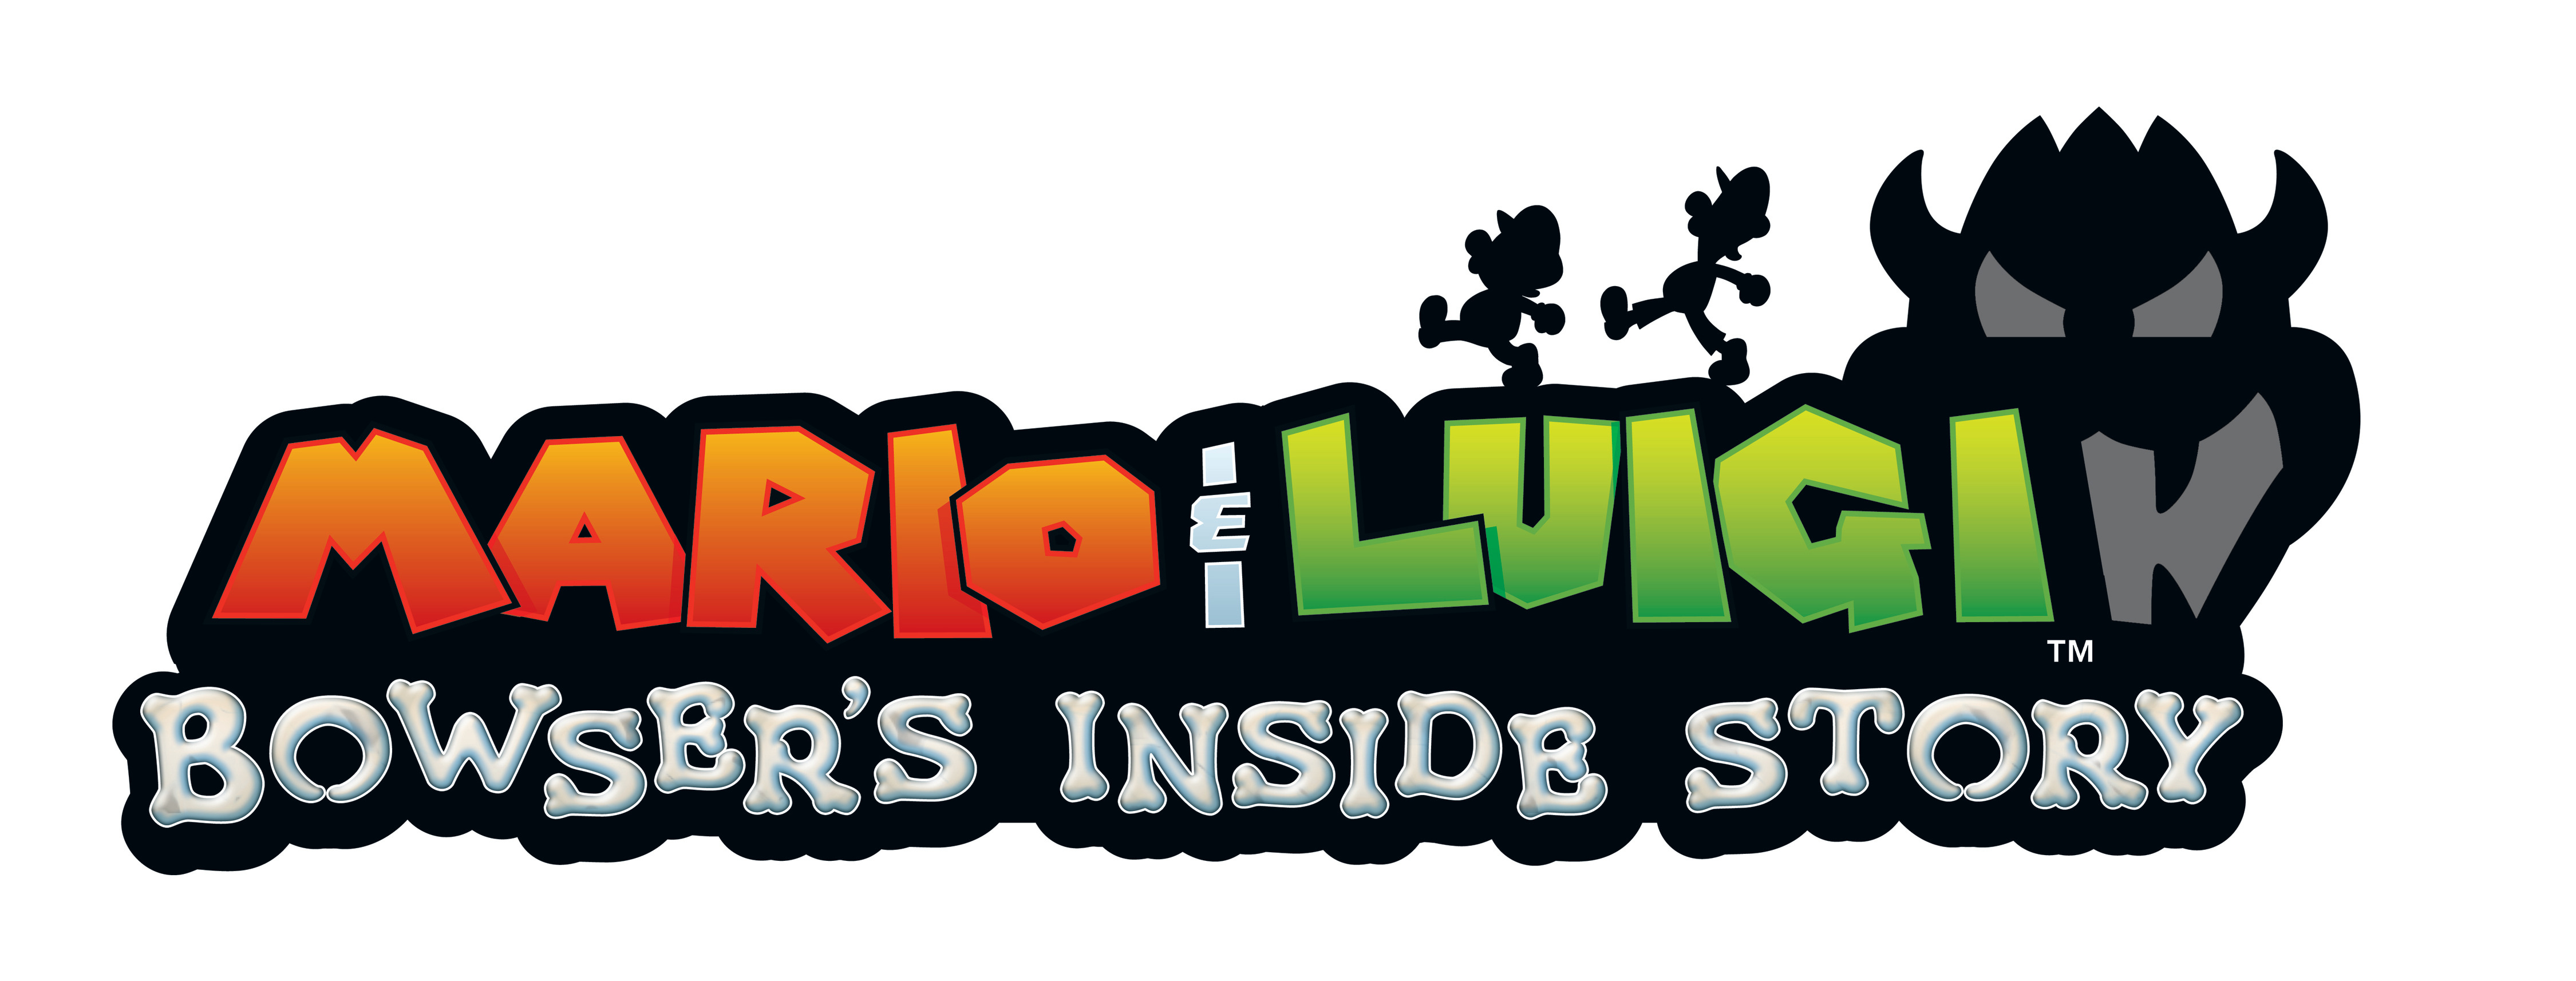 Mario luigi bowser. Mario and Luigi Bowser's inside story. Bowser's inside story. Mario & Luigi - Bowser's inside story (us)(m3)(xenophobia). Марио и Луиджи Боузер инсайд стори.